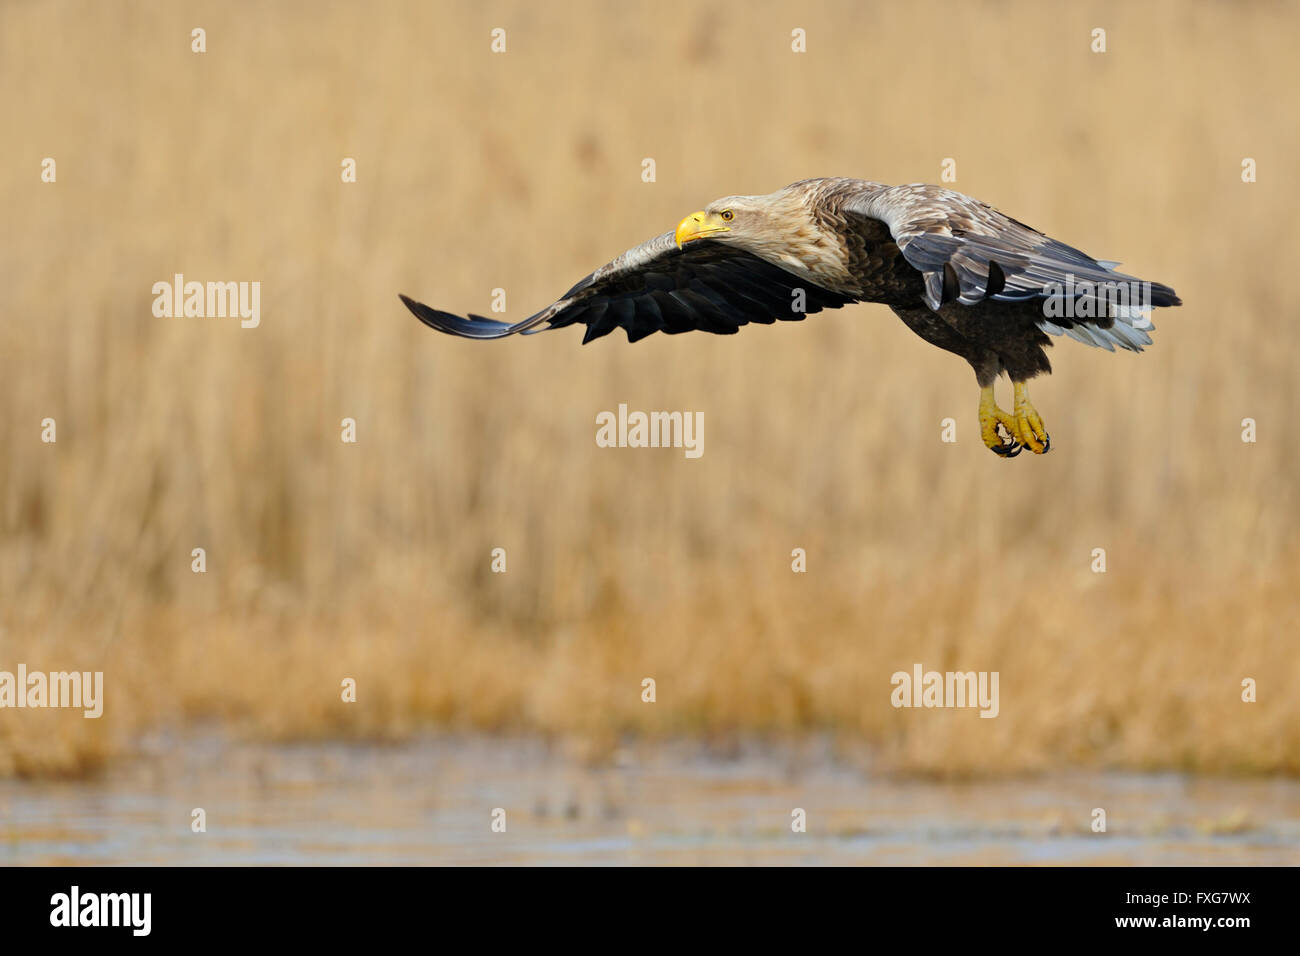 White Tailed Eagle / Sea Eagle ( Haliaeetus albicilla ), adulti rapace, sorvolando zone umide circondate da golden reed. Foto Stock